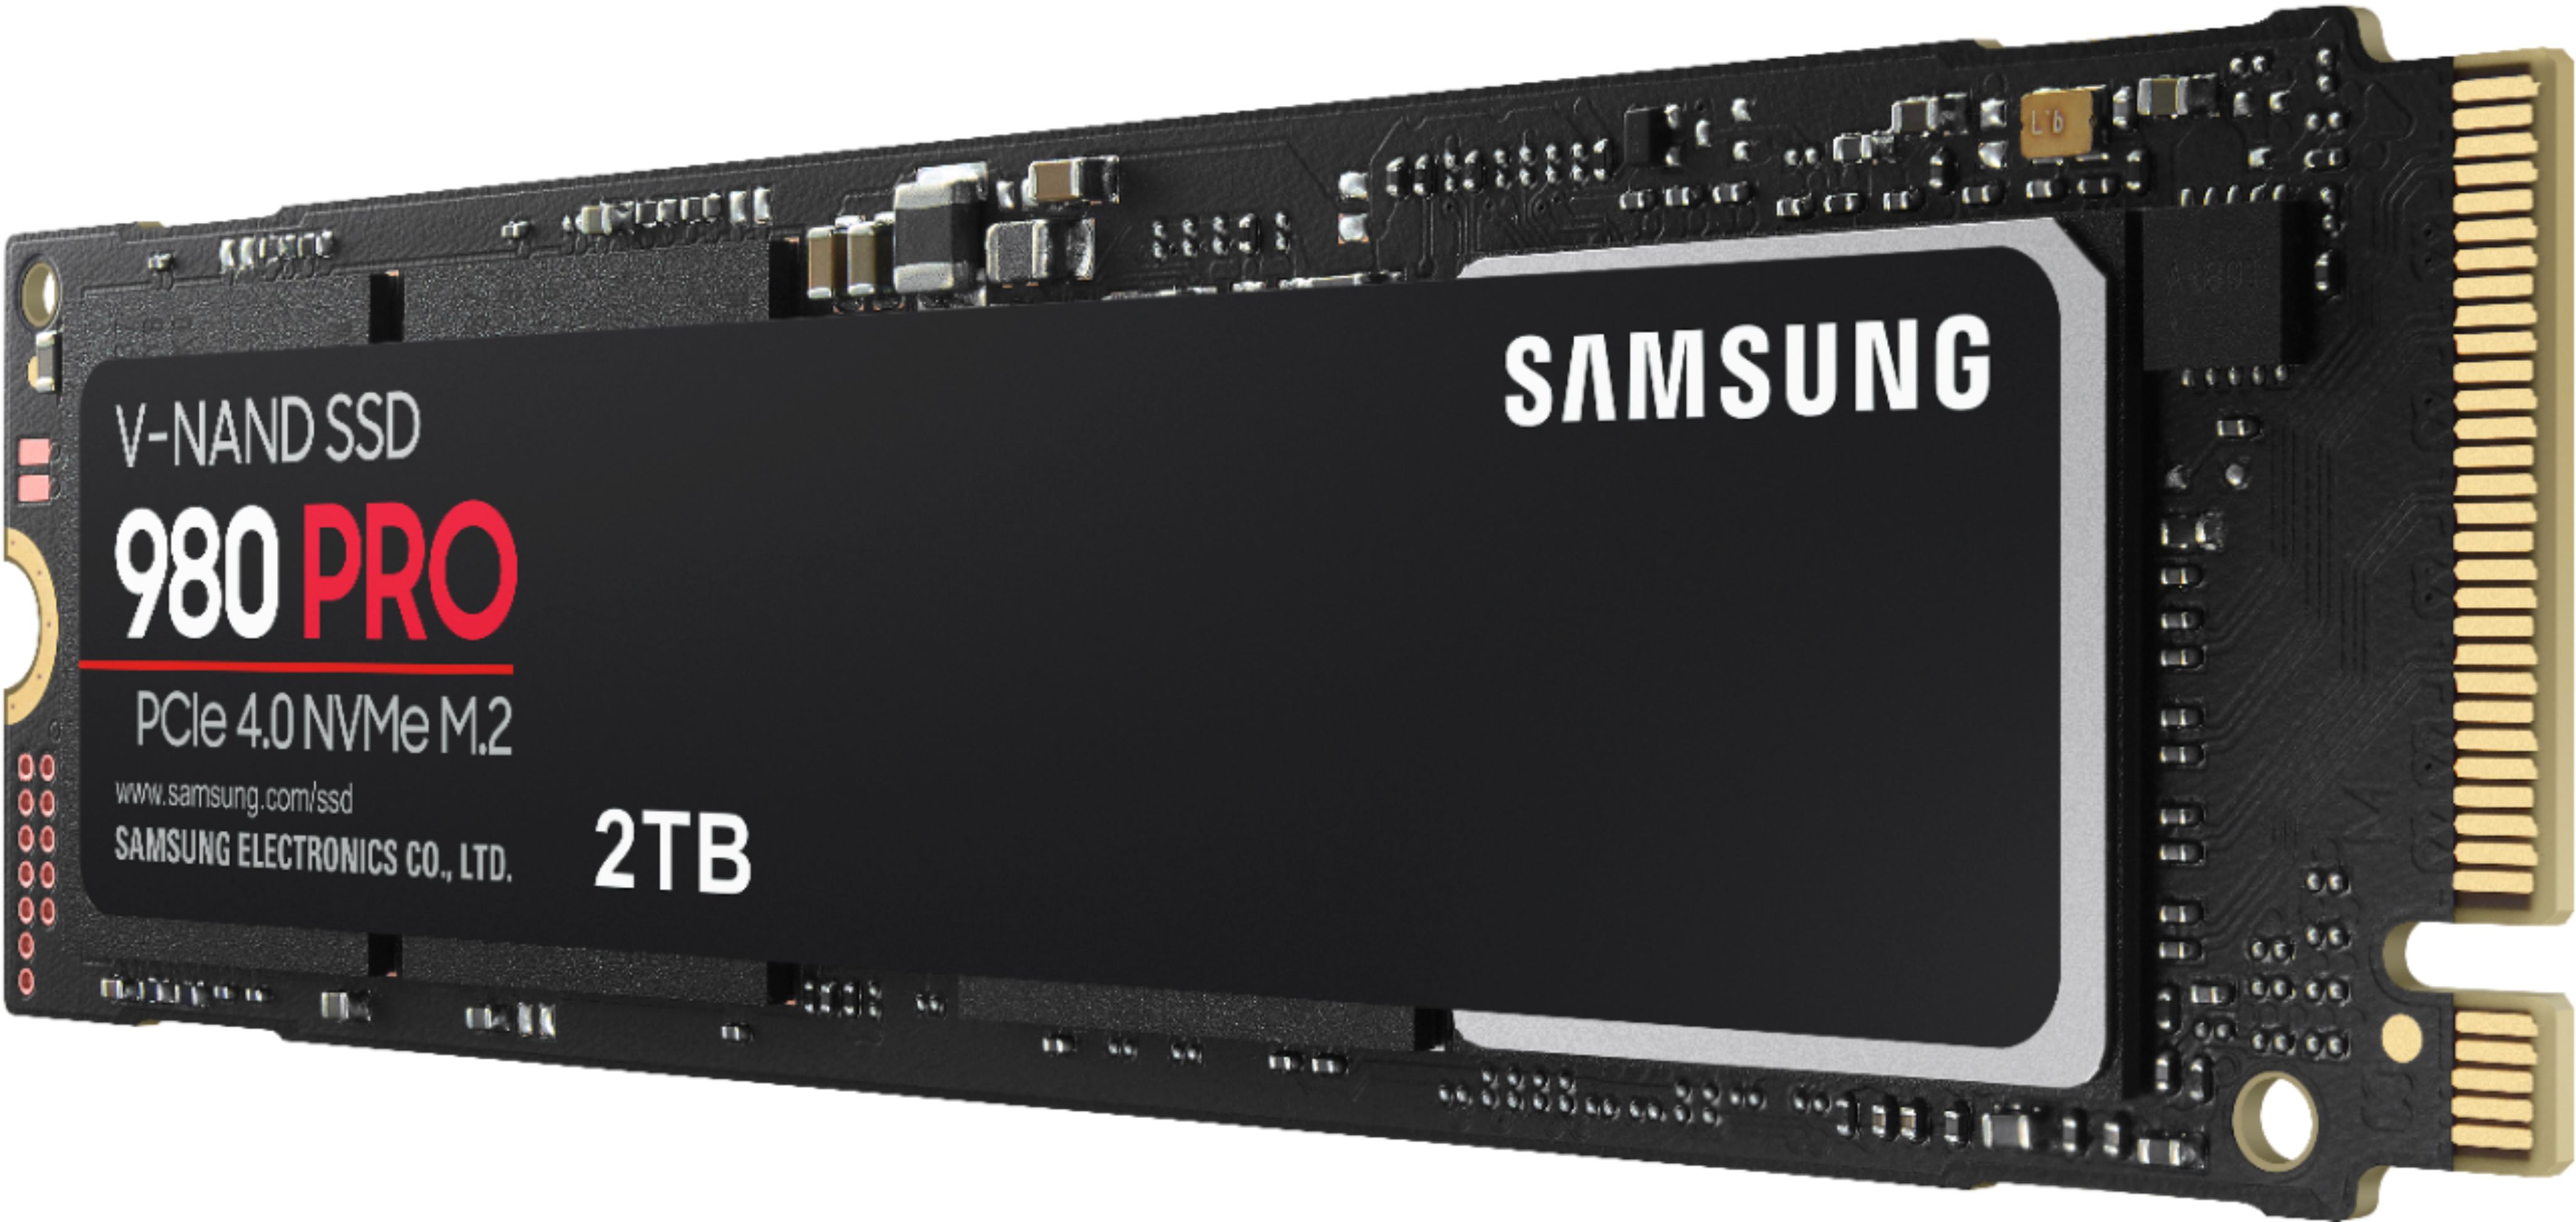 Estallar Marcha atrás necesario Samsung 980 PRO 2TB Internal Gaming SSD PCIe Gen 4 x4 NVMe MZ-V8P2T0B/AM -  Best Buy